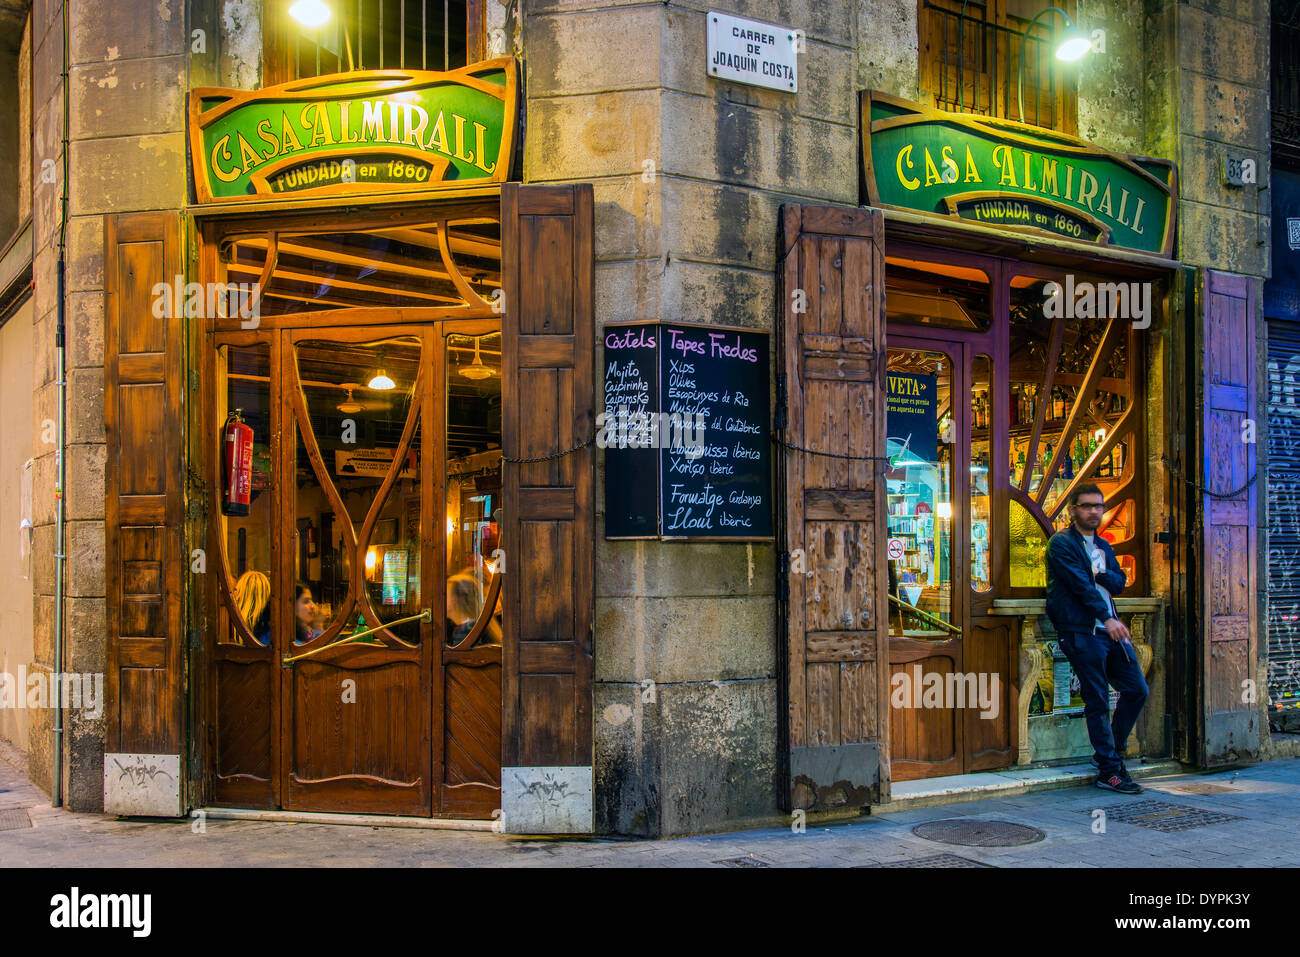 Casa Almirall, a historical bar in Raval district, Barcelona, Catalonia, Spain Stock Photo